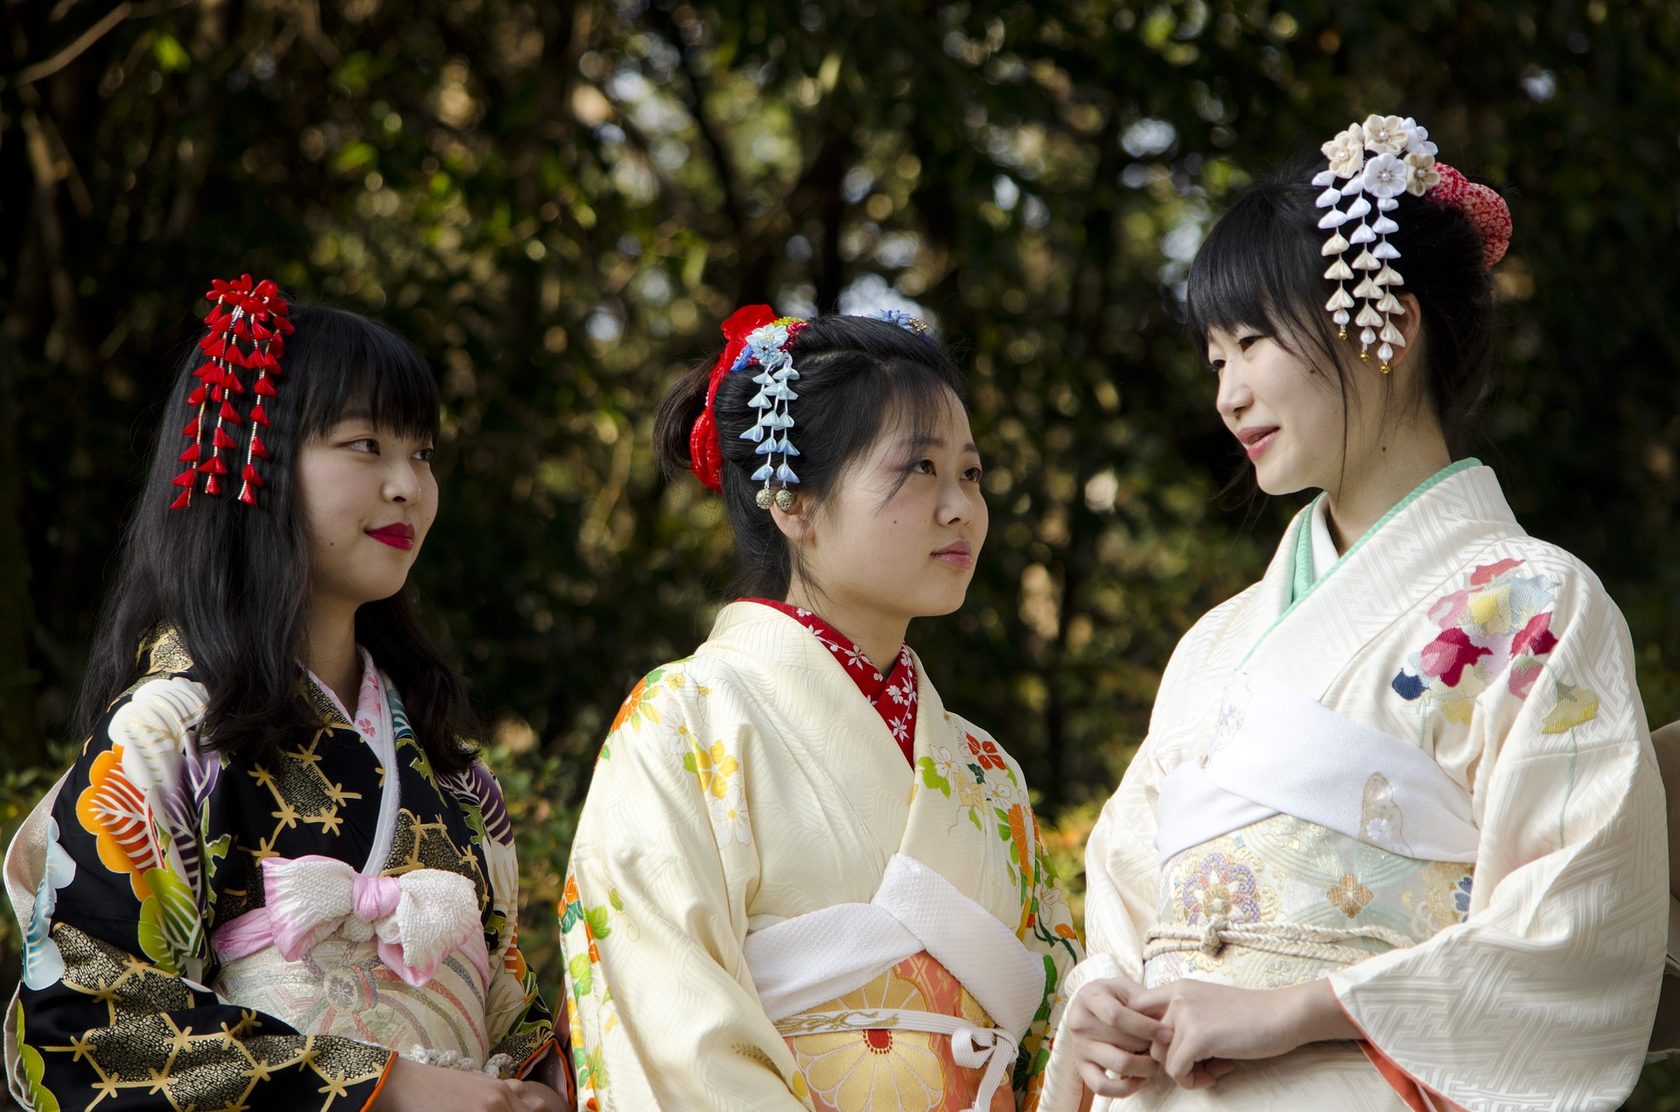 Japanese women is. Япония люди в кимоно. Япония народ кимоно. Японец в кимоно. Японка в кимоно.